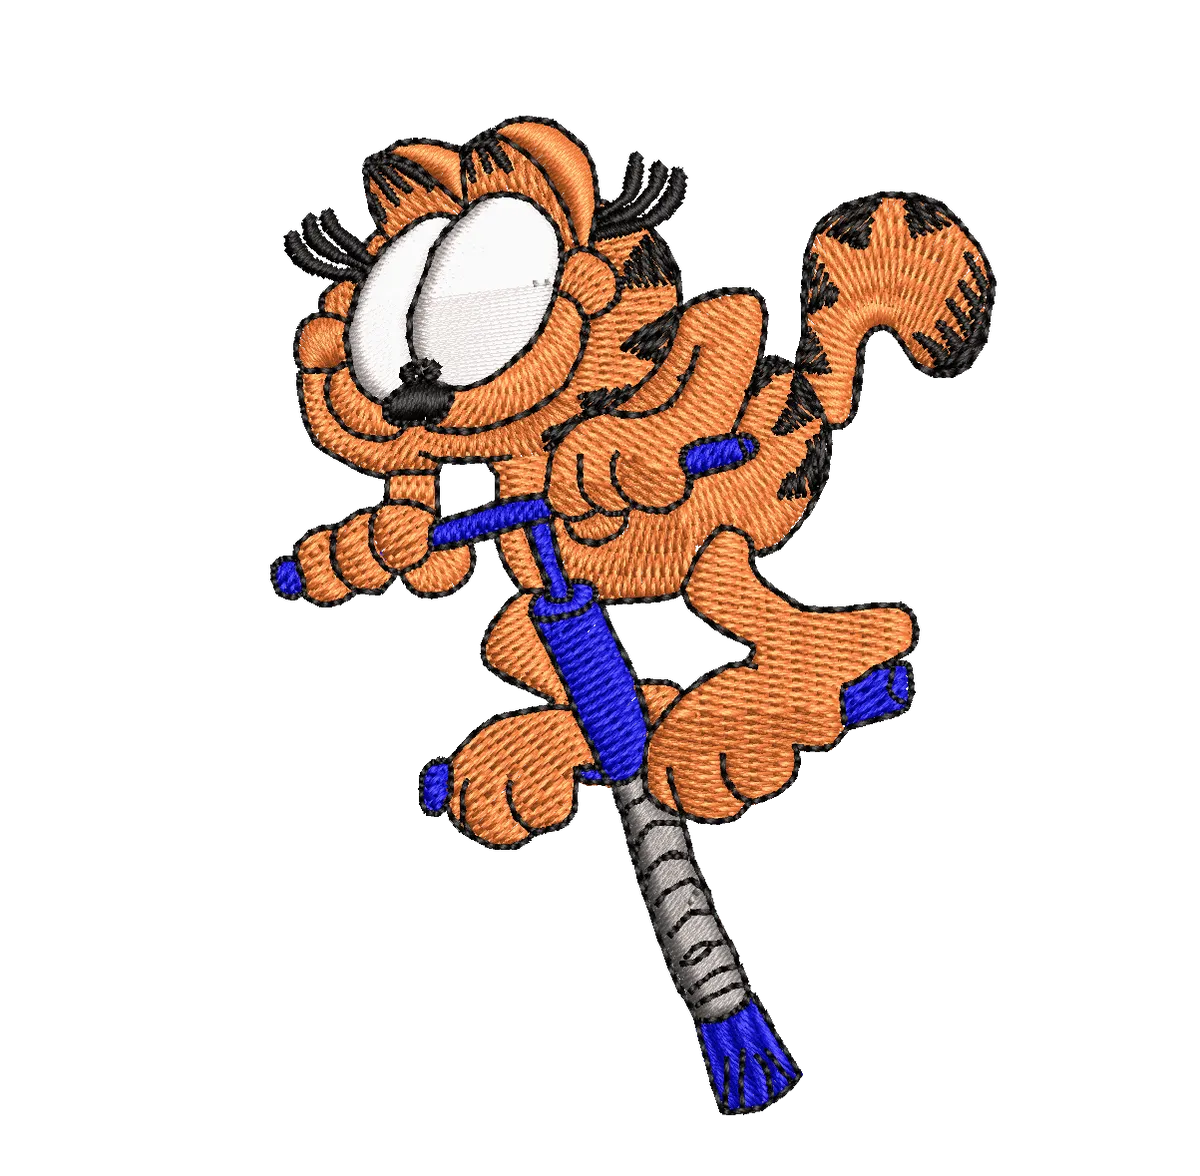 Garfield 54 - Embroidery Design - FineryEmbroidery